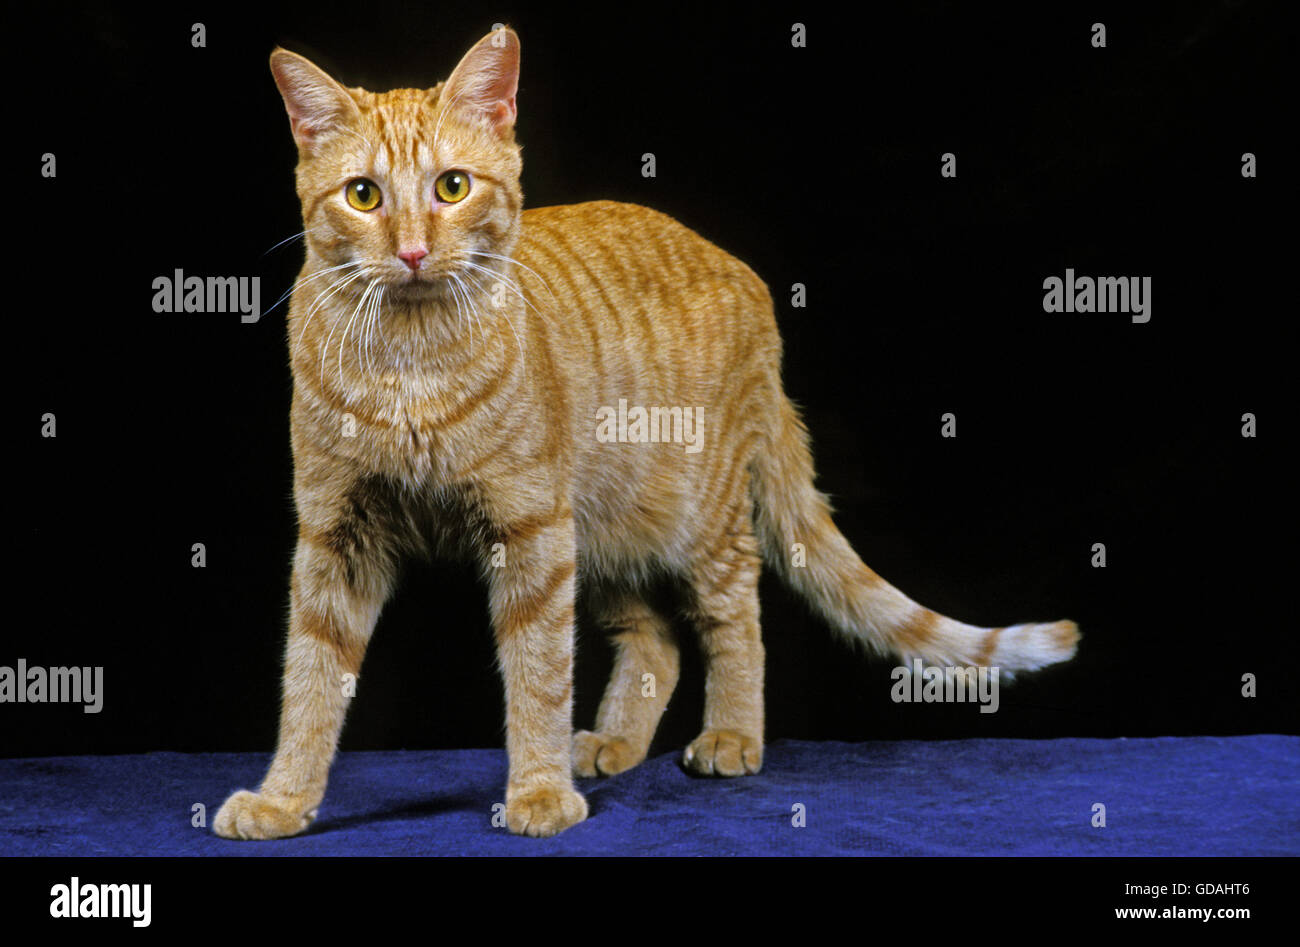 American Shorthair gato doméstico, Adulto contra fondo negro Foto de stock